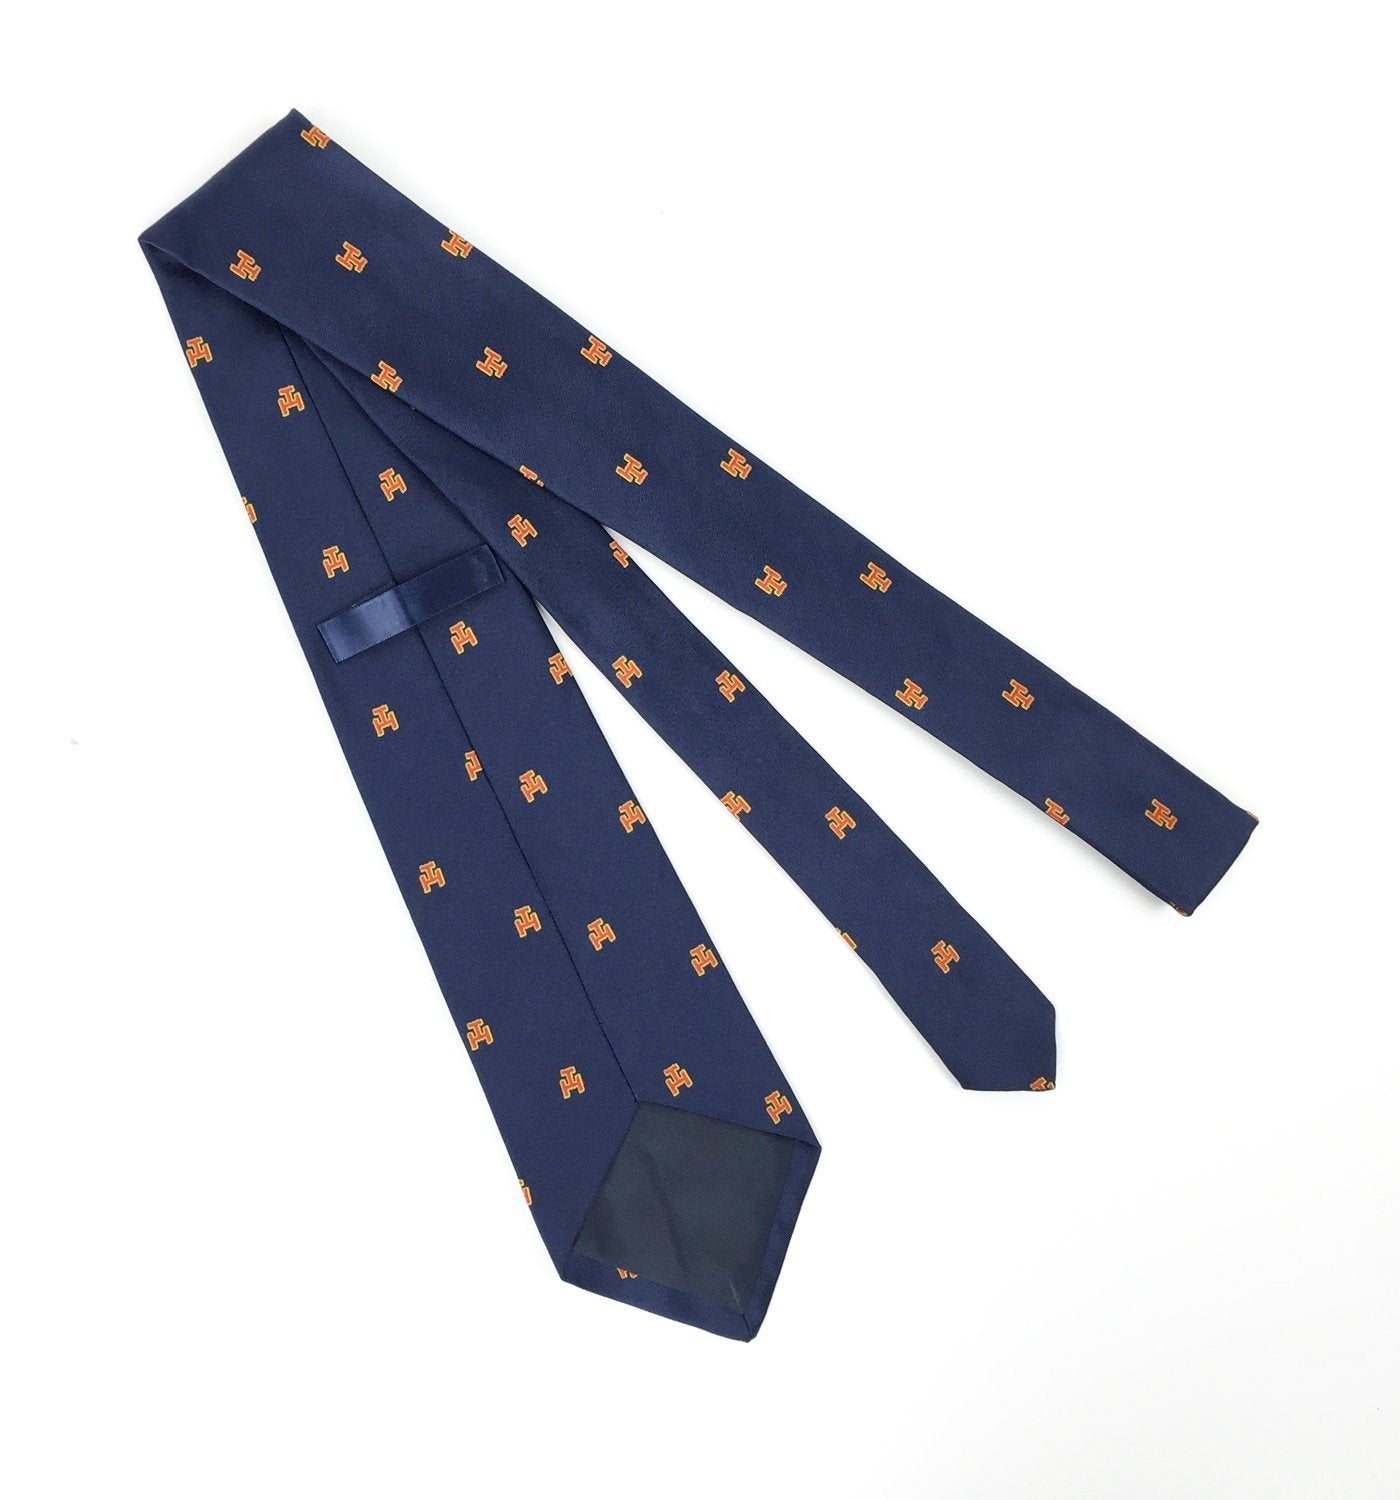 Royal Arch Chapter Necktie - Navy Blue Silk Fabric - Bricks Masons